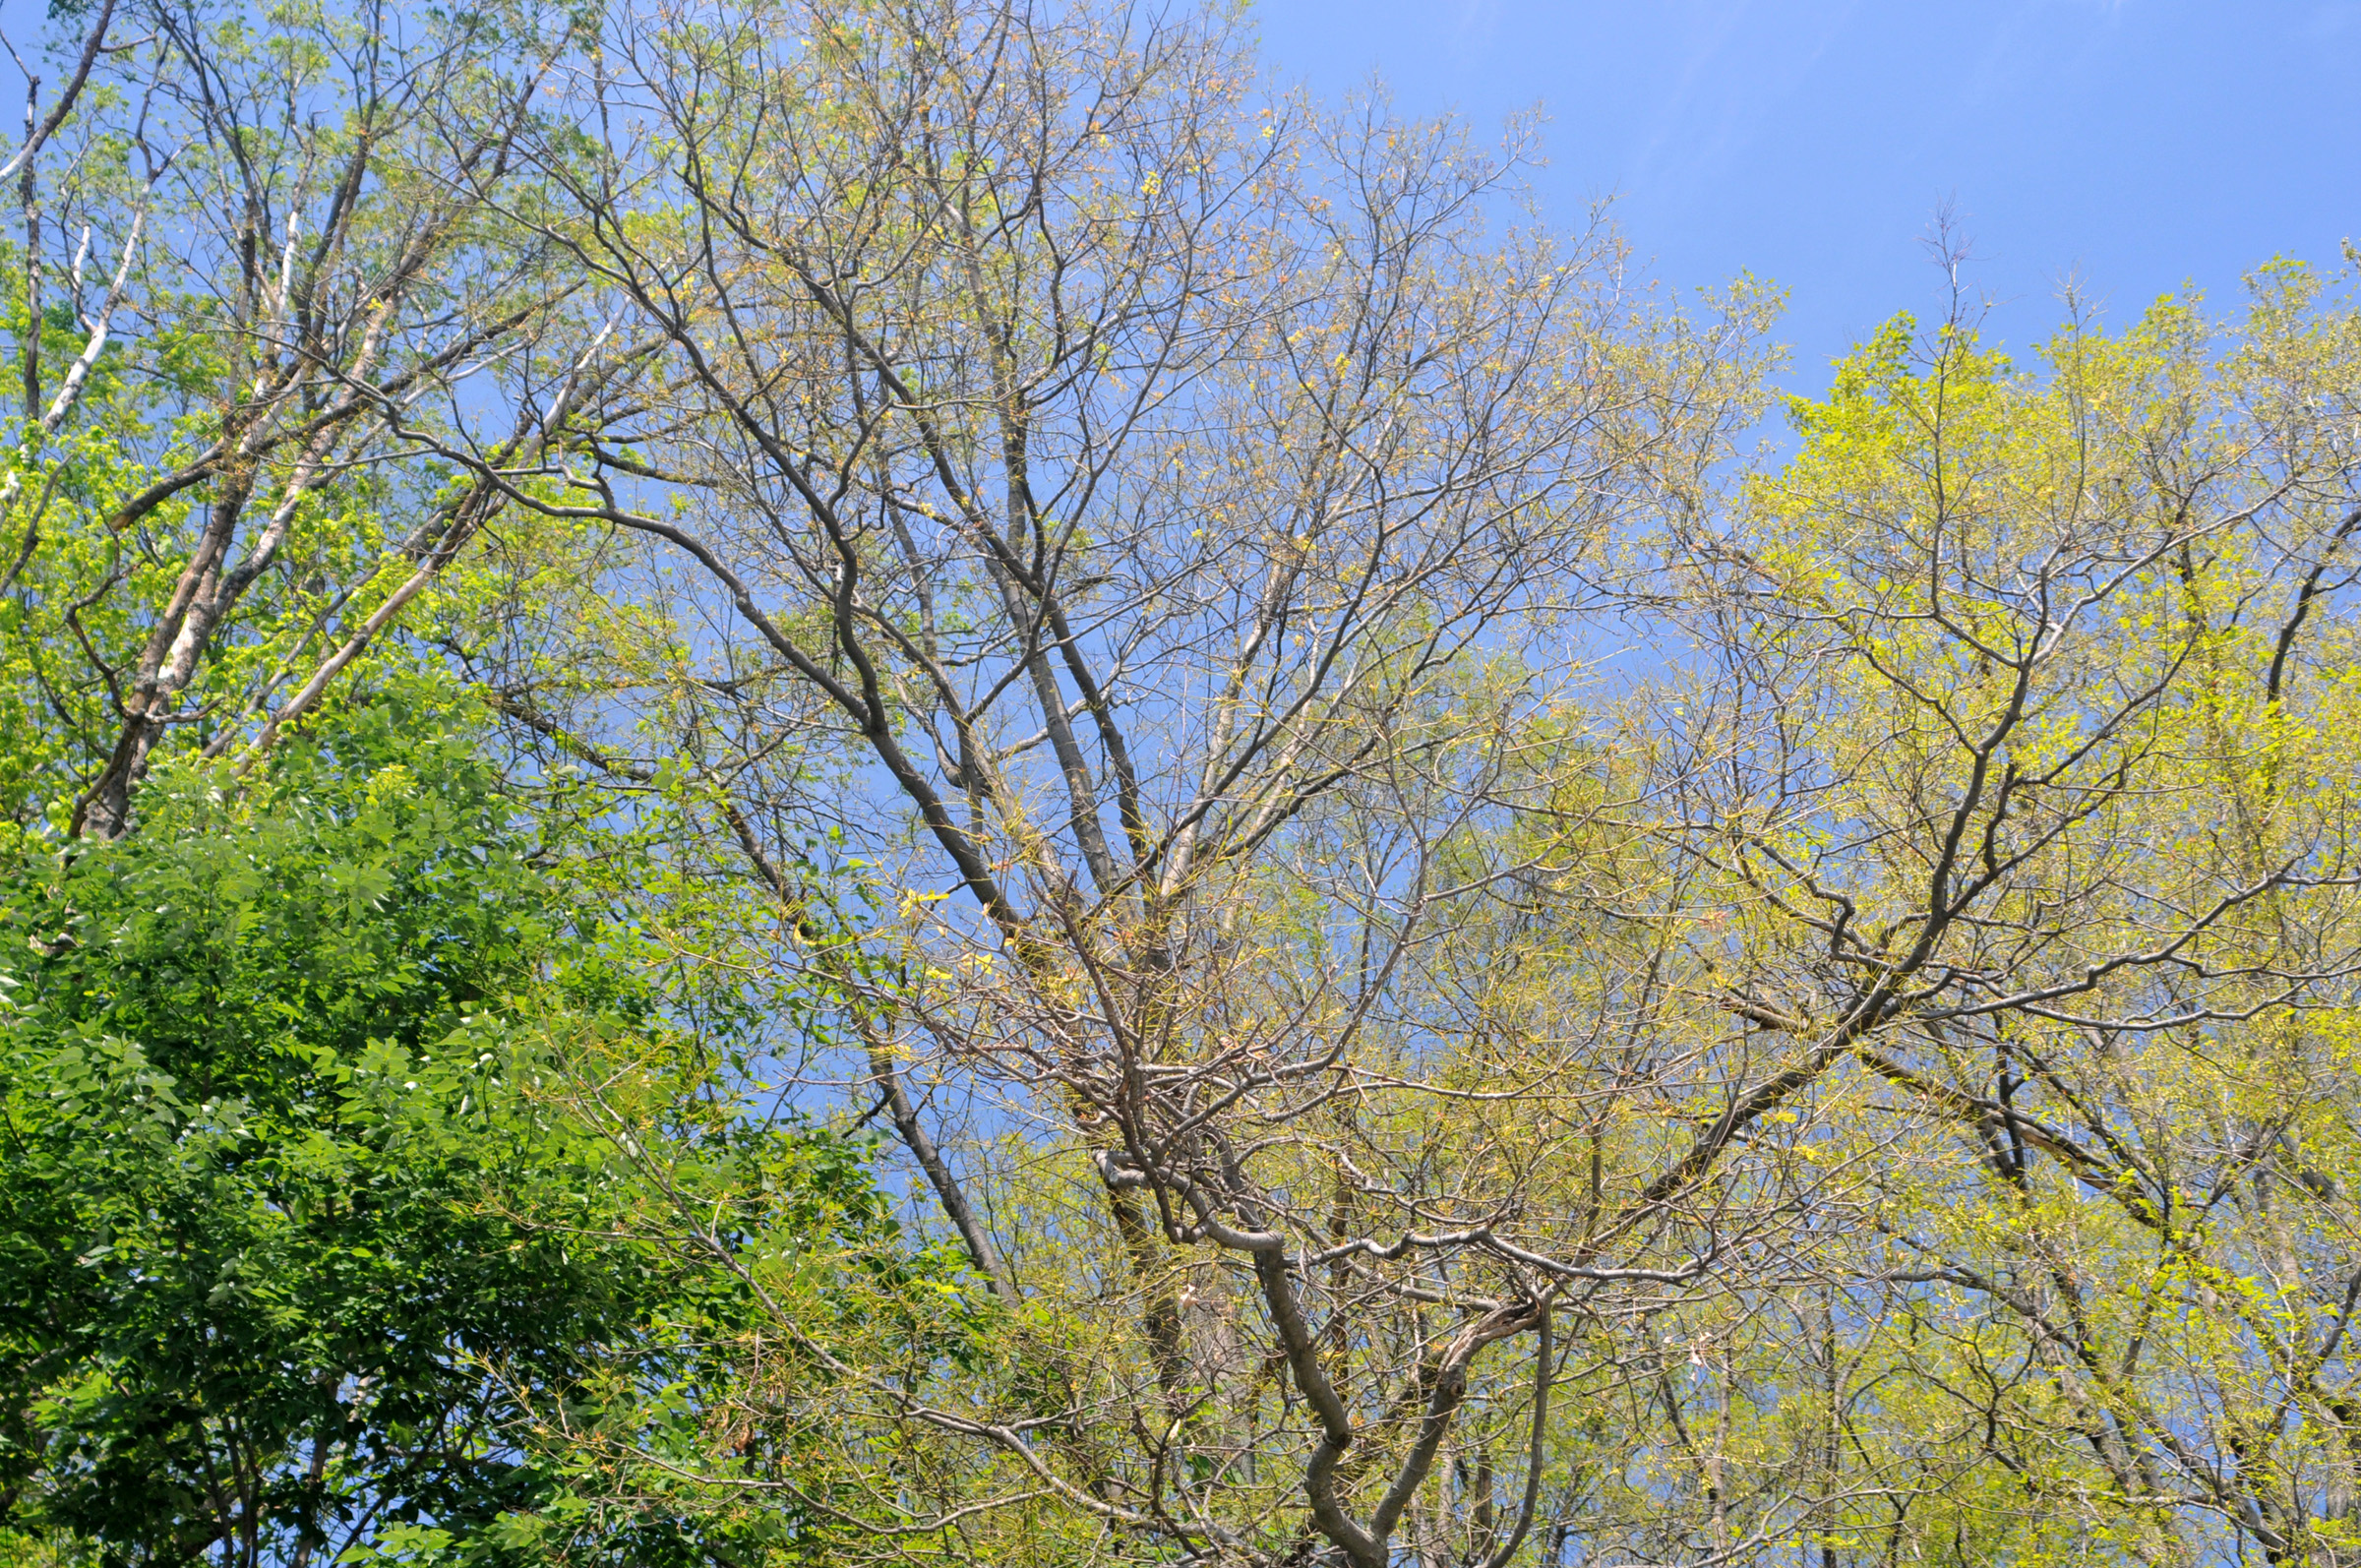 Defoliated oak trees